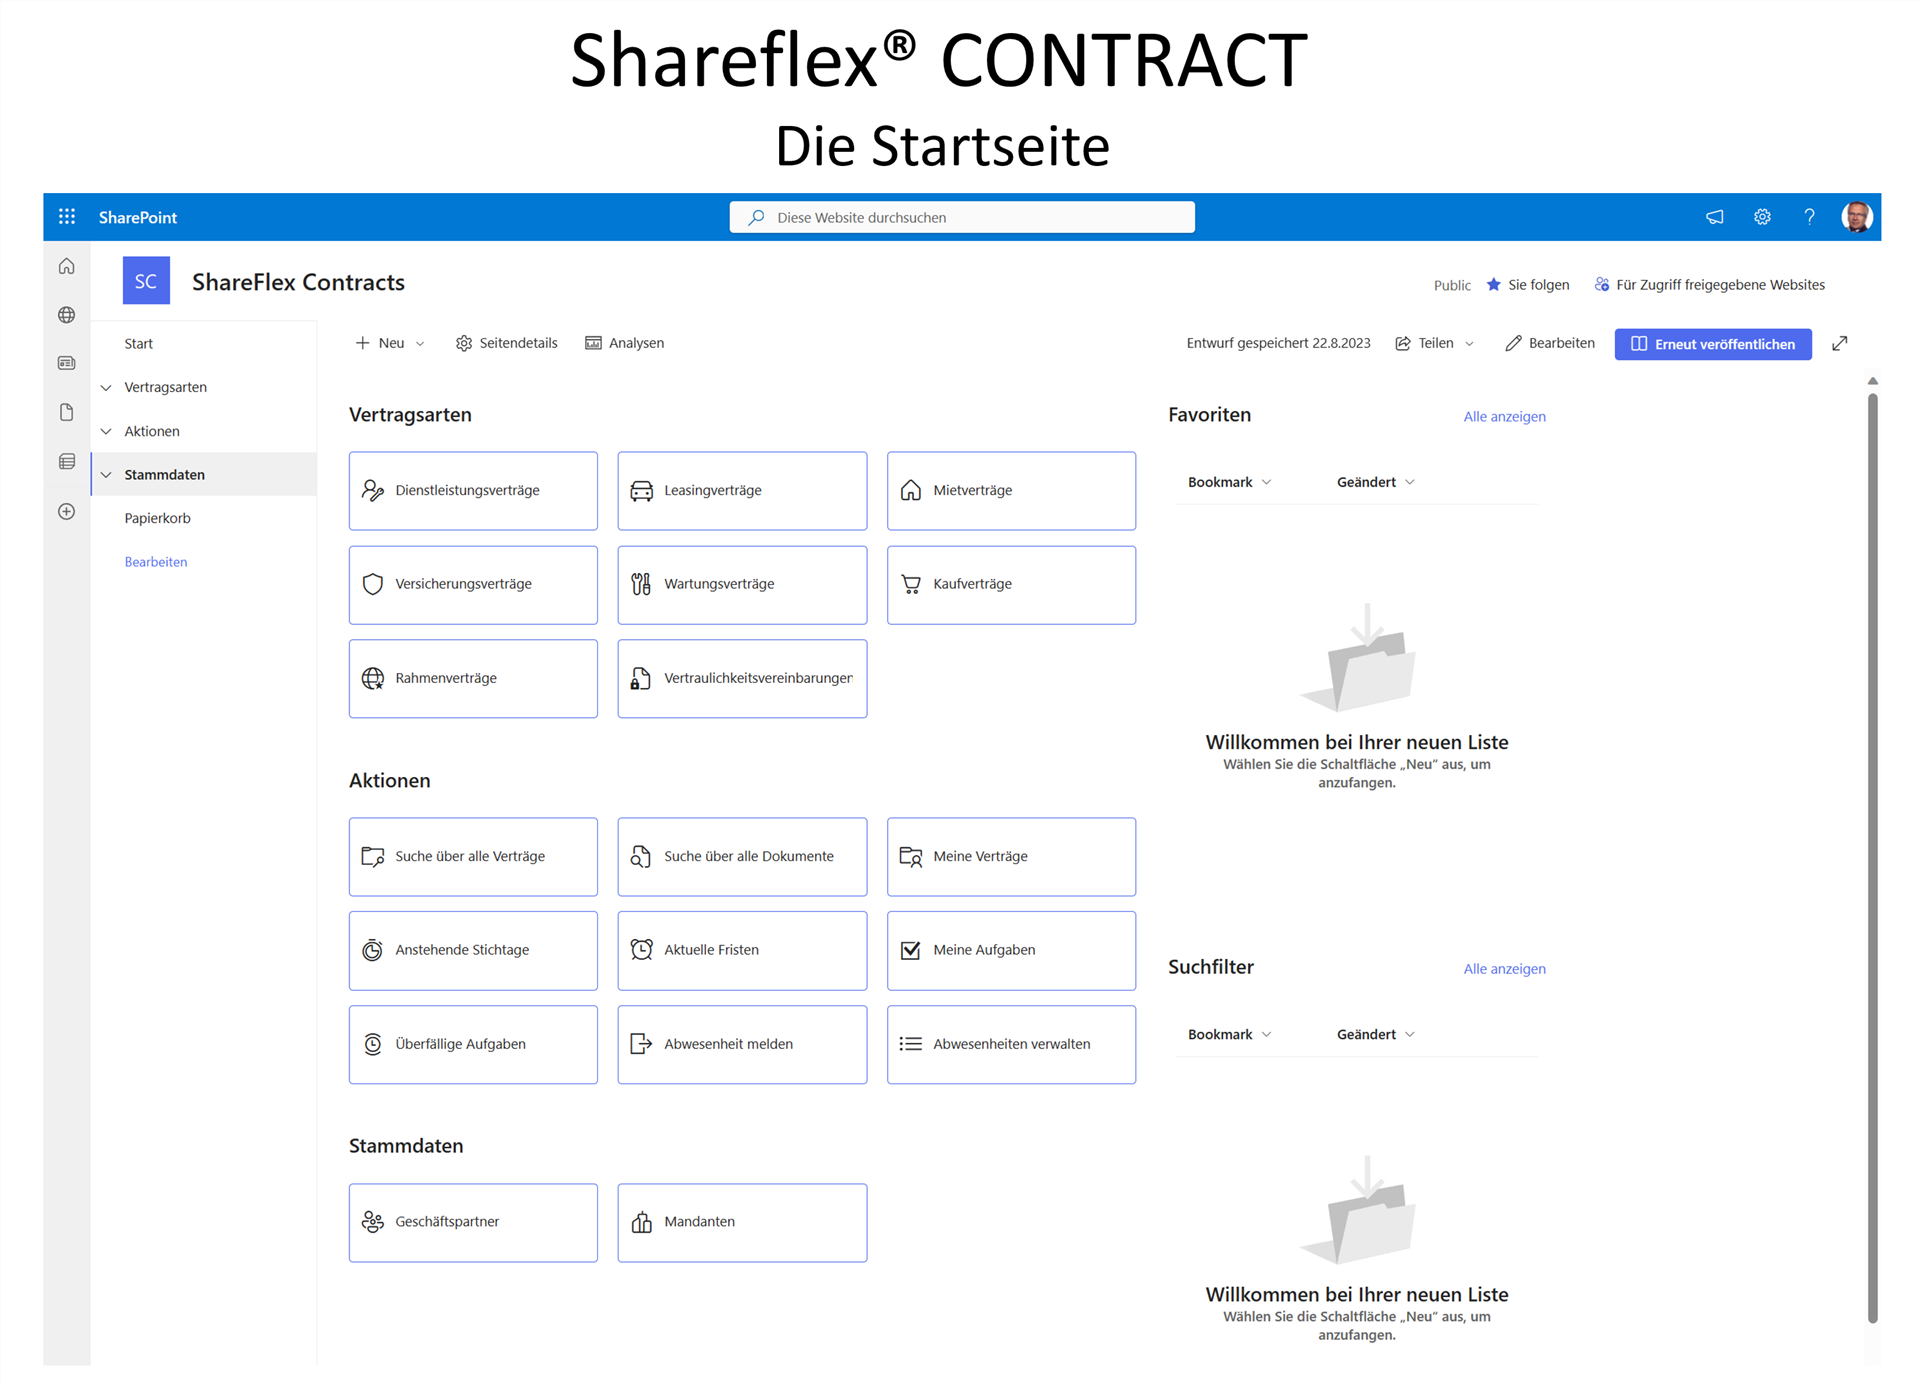 shareflex CONTRACT DOCUMENTS